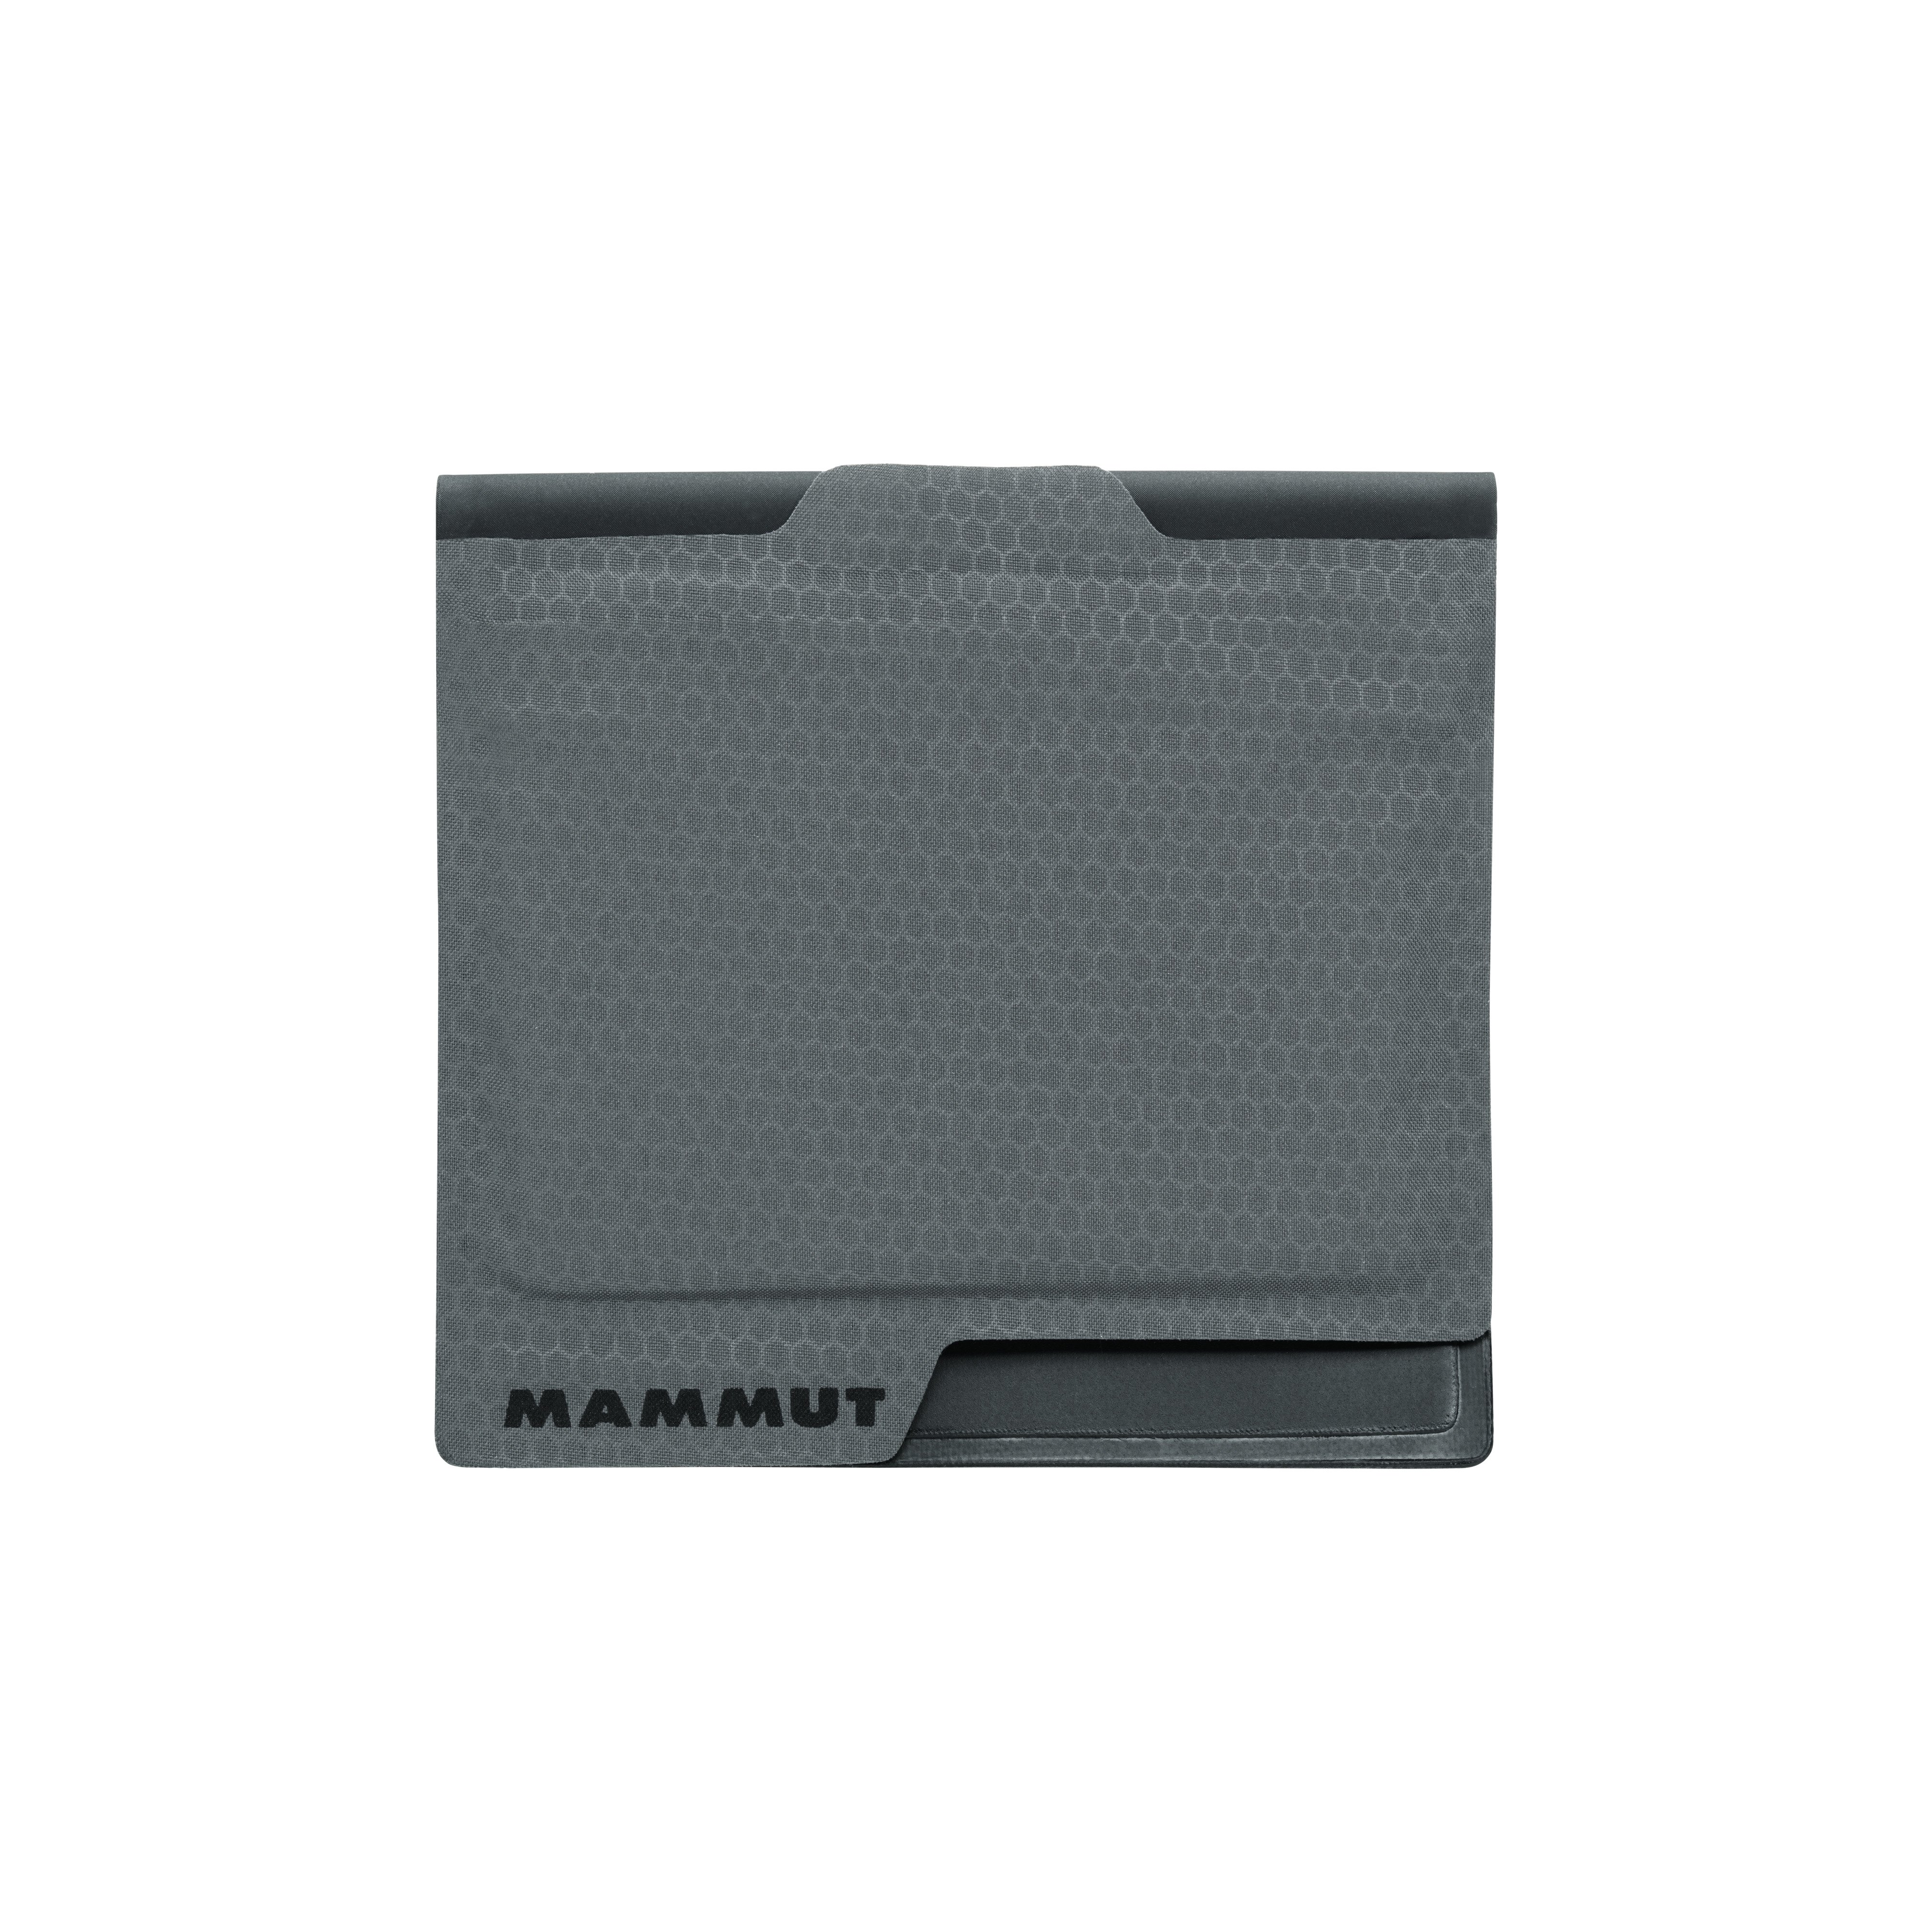 Smart Wallet Light - smoke, one size product image